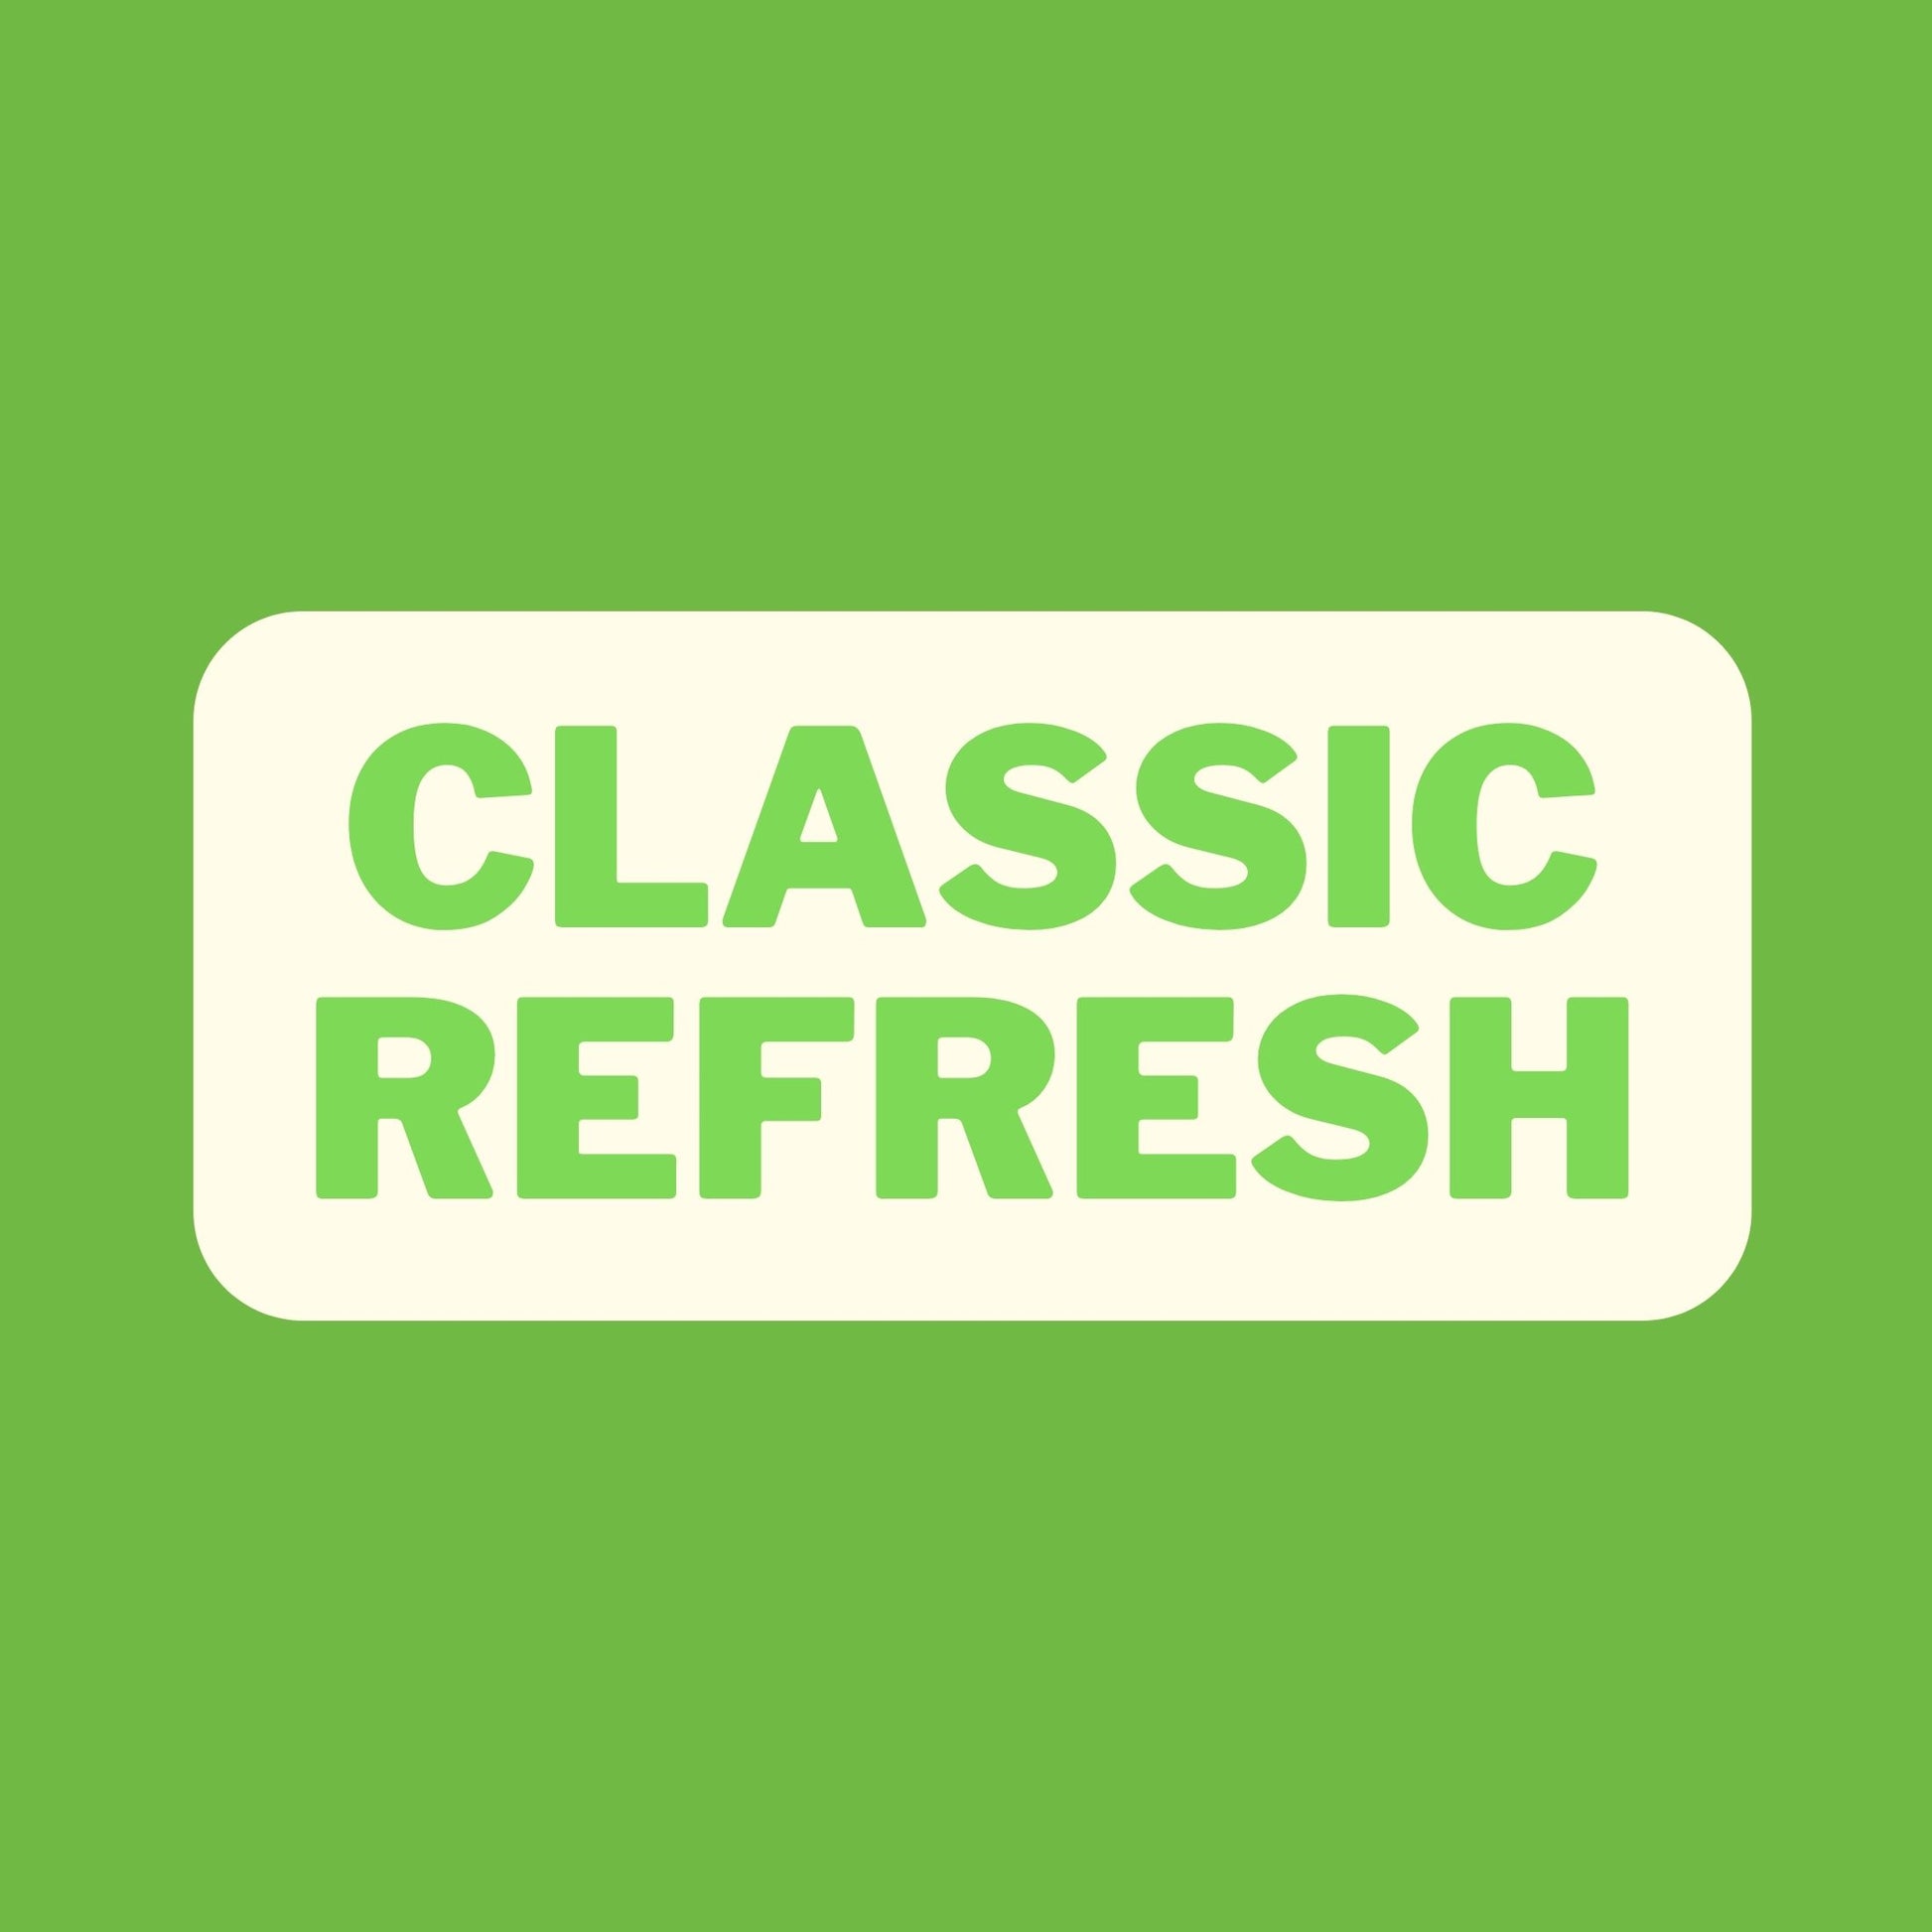 The FreshJax Classic ReFresh